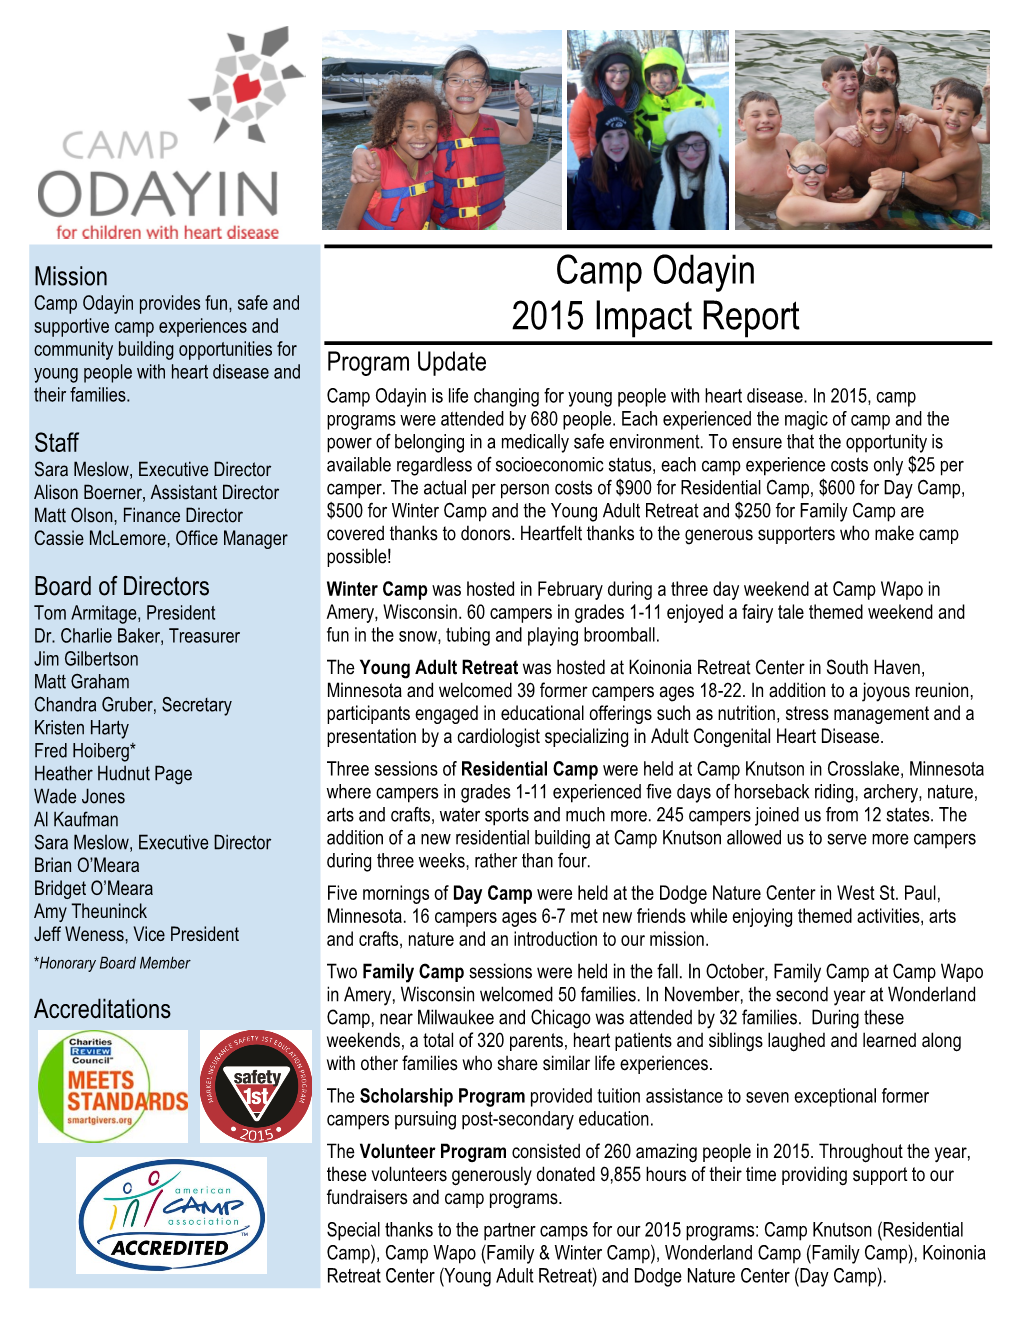 Camp Odayin 2015 Impact Report